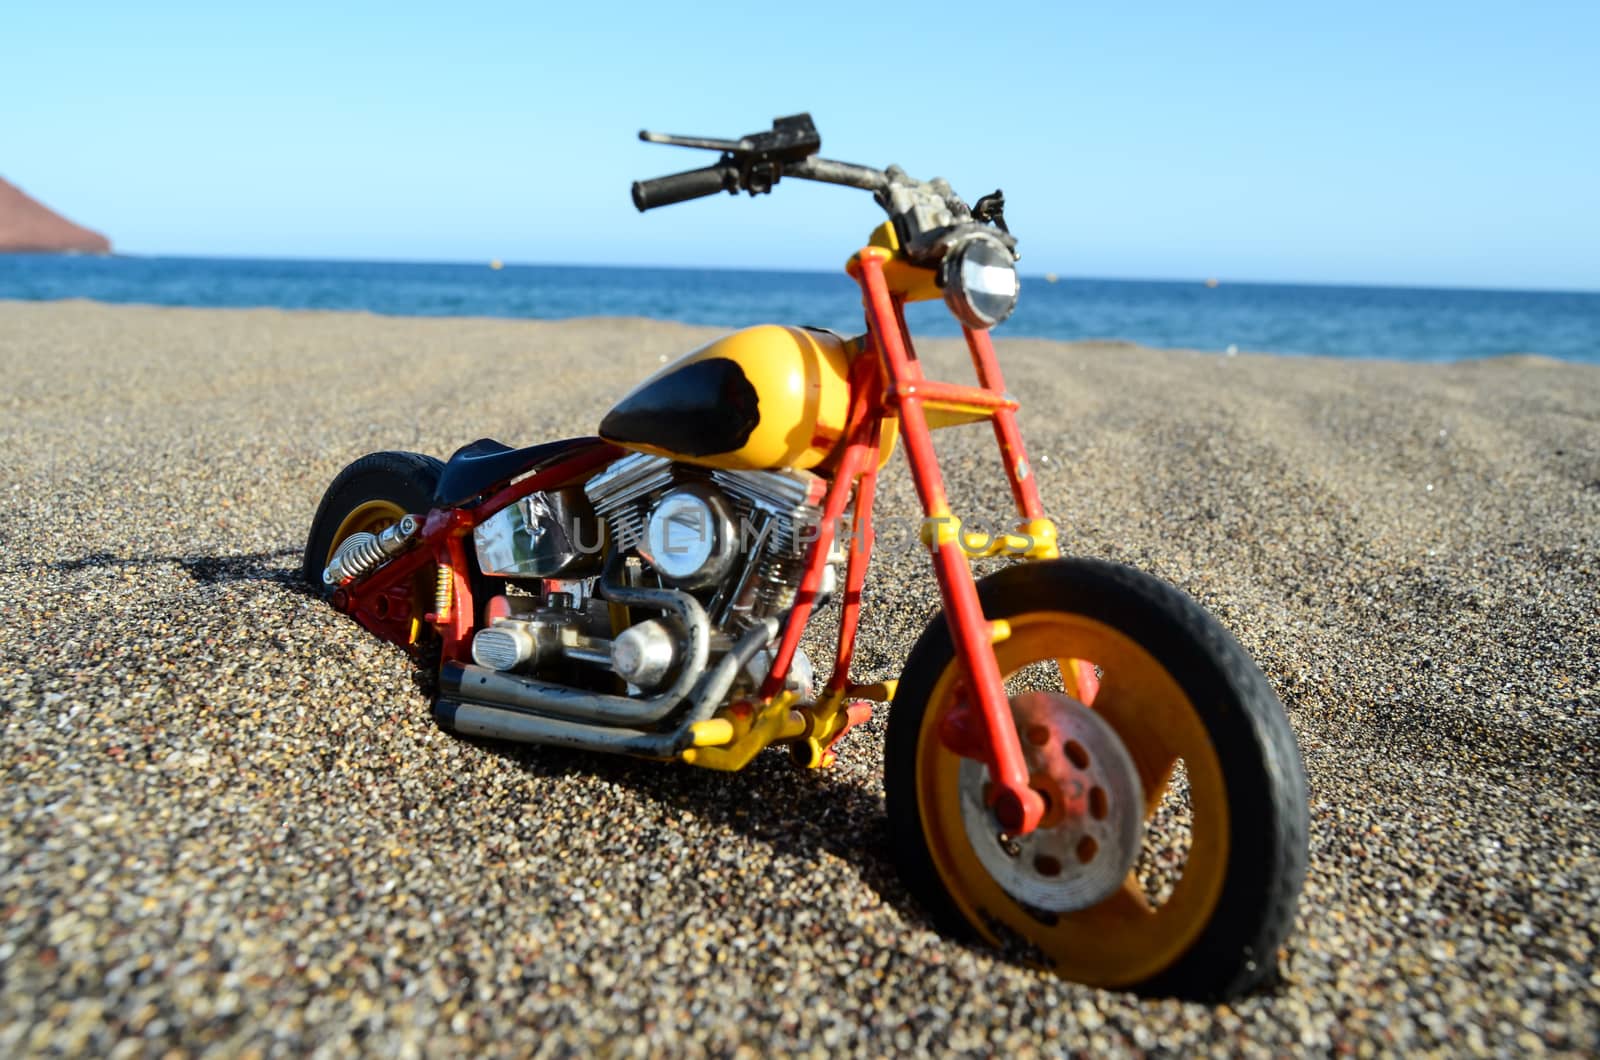 Motorbike on the Beach by underworld